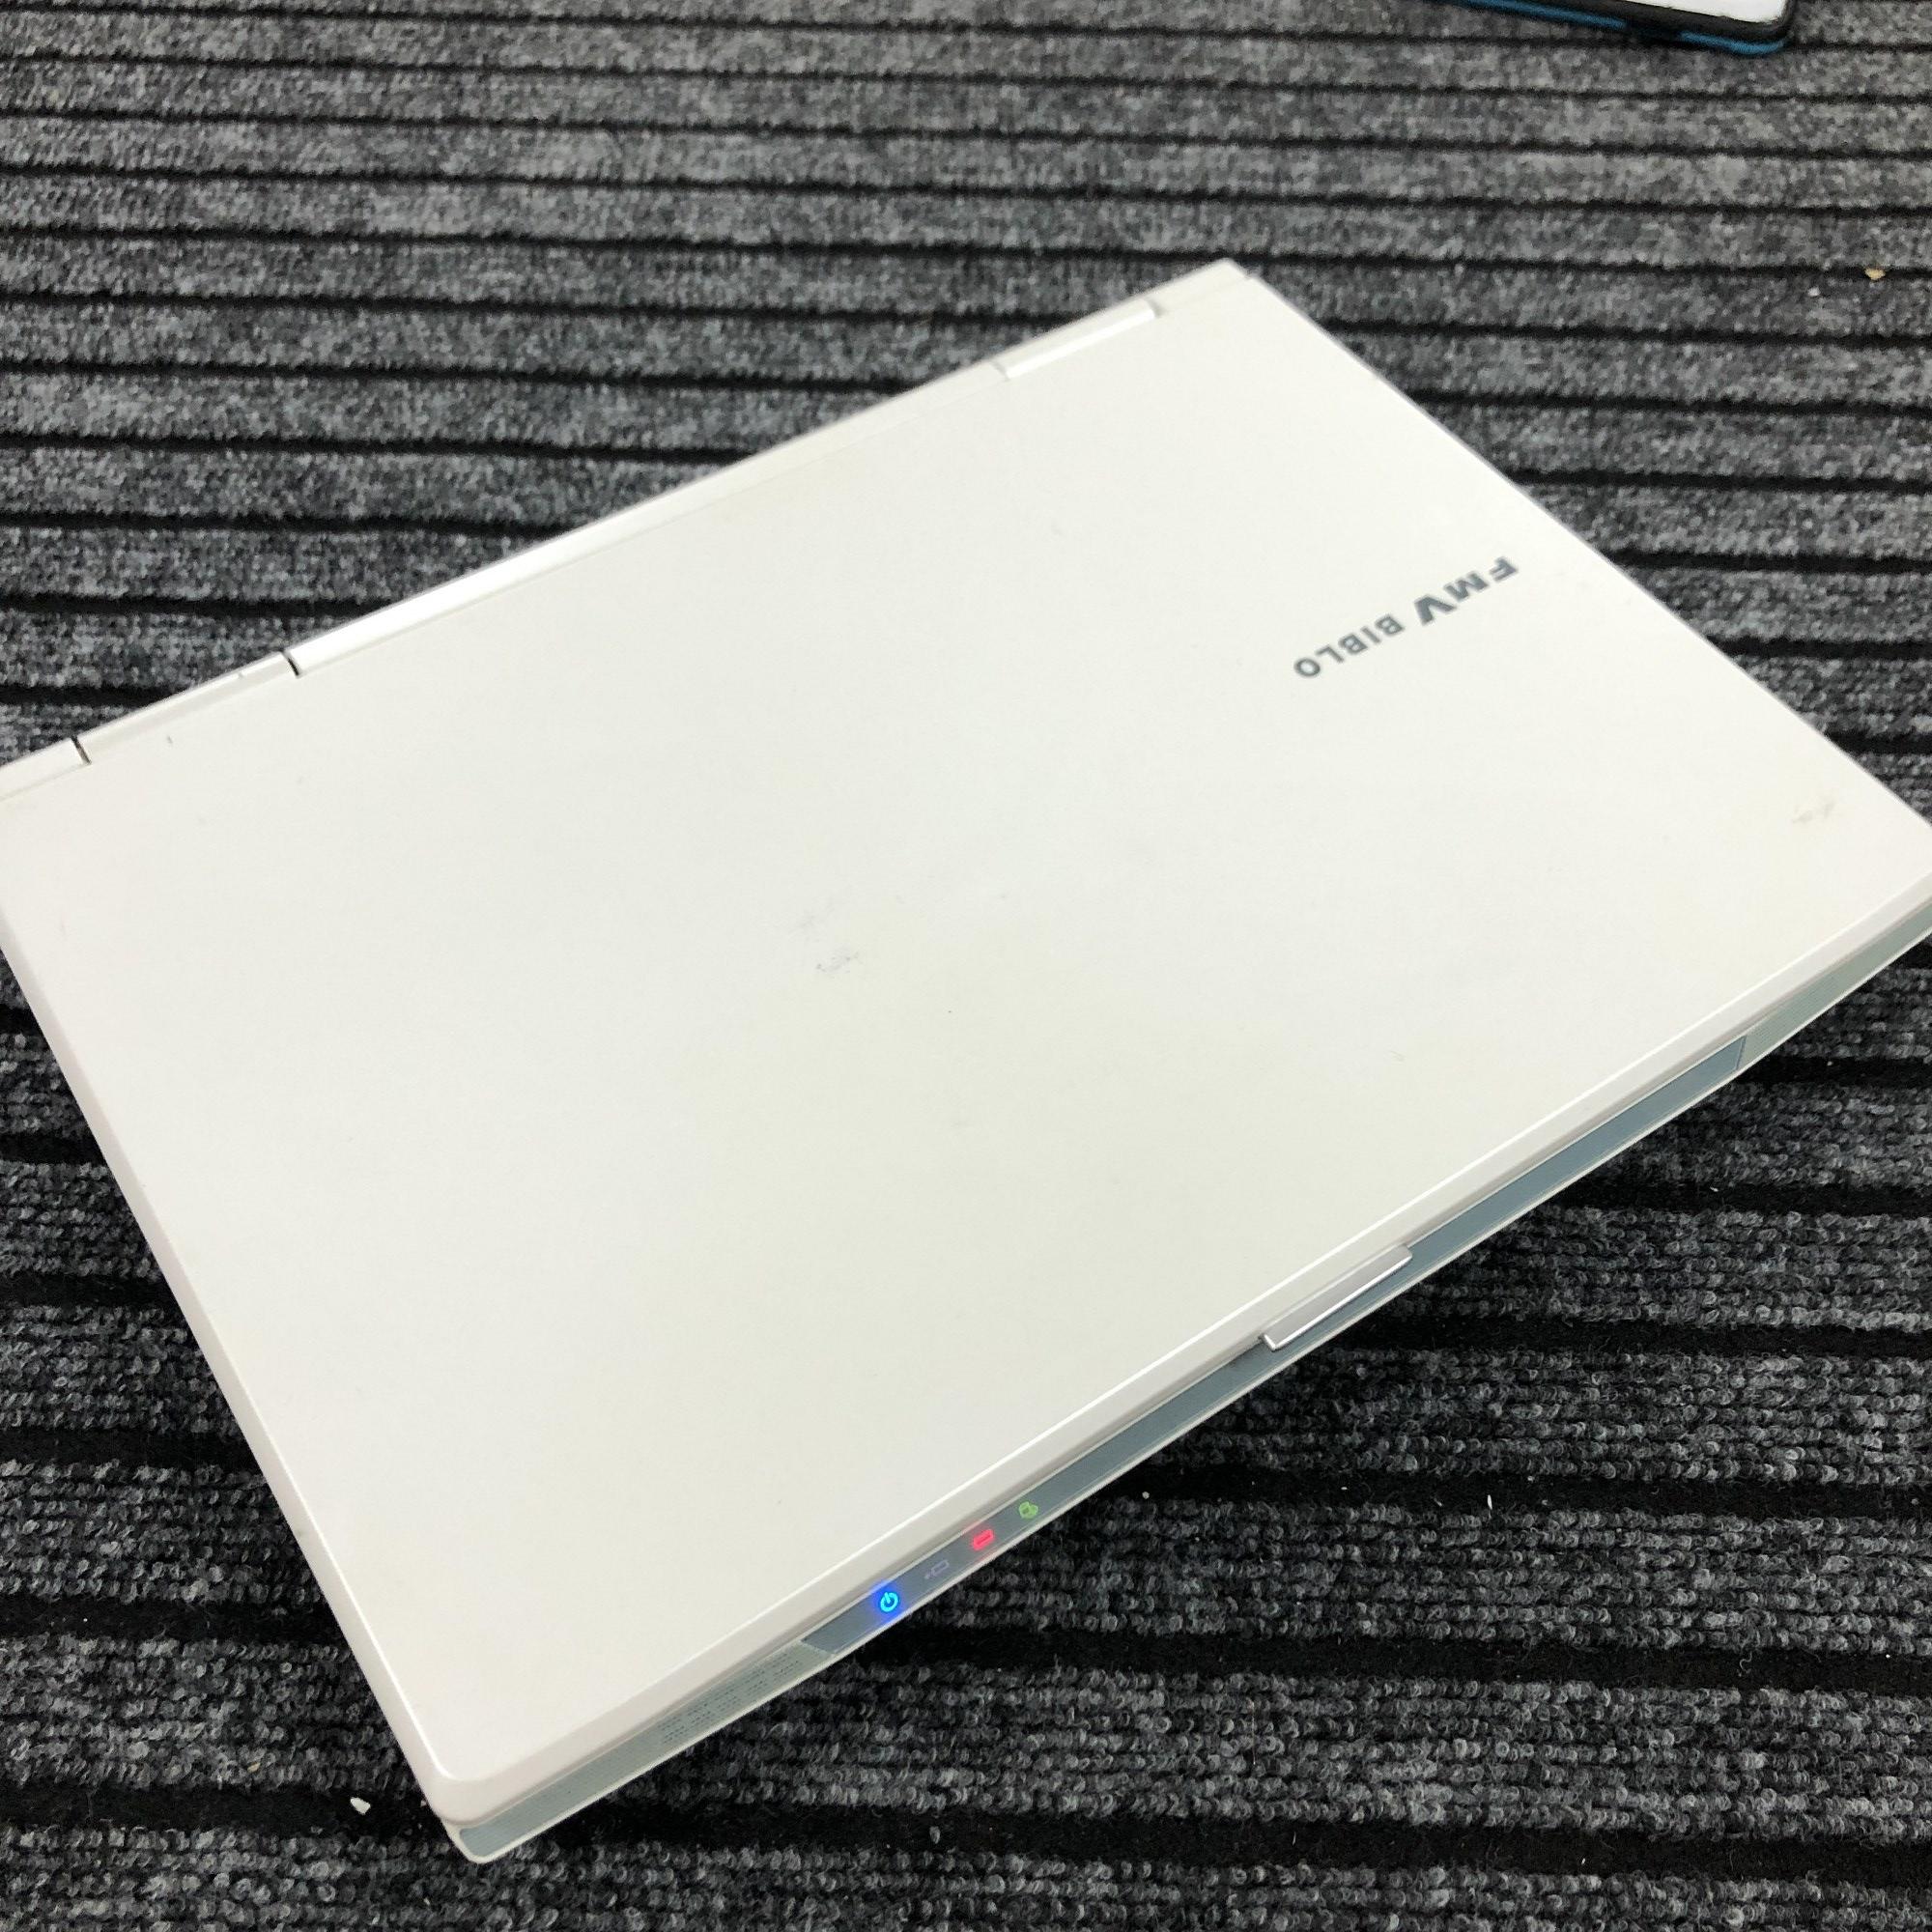 Fujitsu Fmv Biblo Nf70y Intel Core 2 Duo T7250 2gb Ddr2 Ram 250gb Hard Disk Window 7 Notebook Budget Laptop Shopee Malaysia